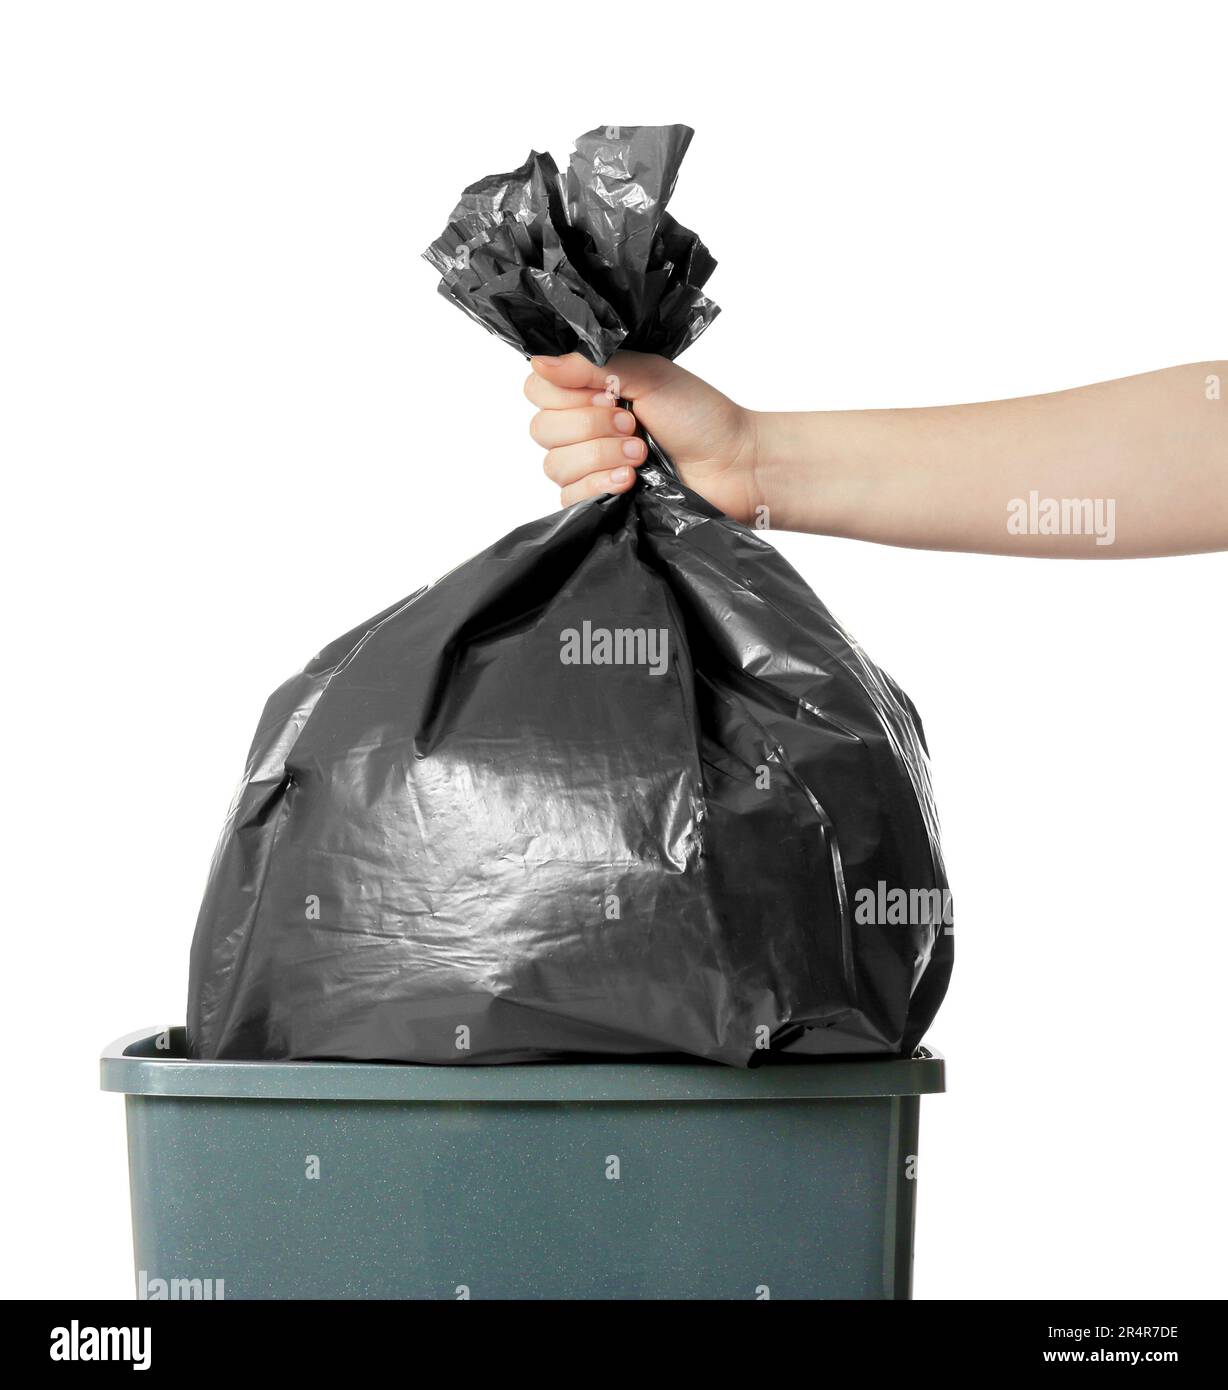 https://c8.alamy.com/comp/2R4R7DE/woman-holding-trash-bag-full-of-garbage-over-bucket-on-white-background-closeup-2R4R7DE.jpg